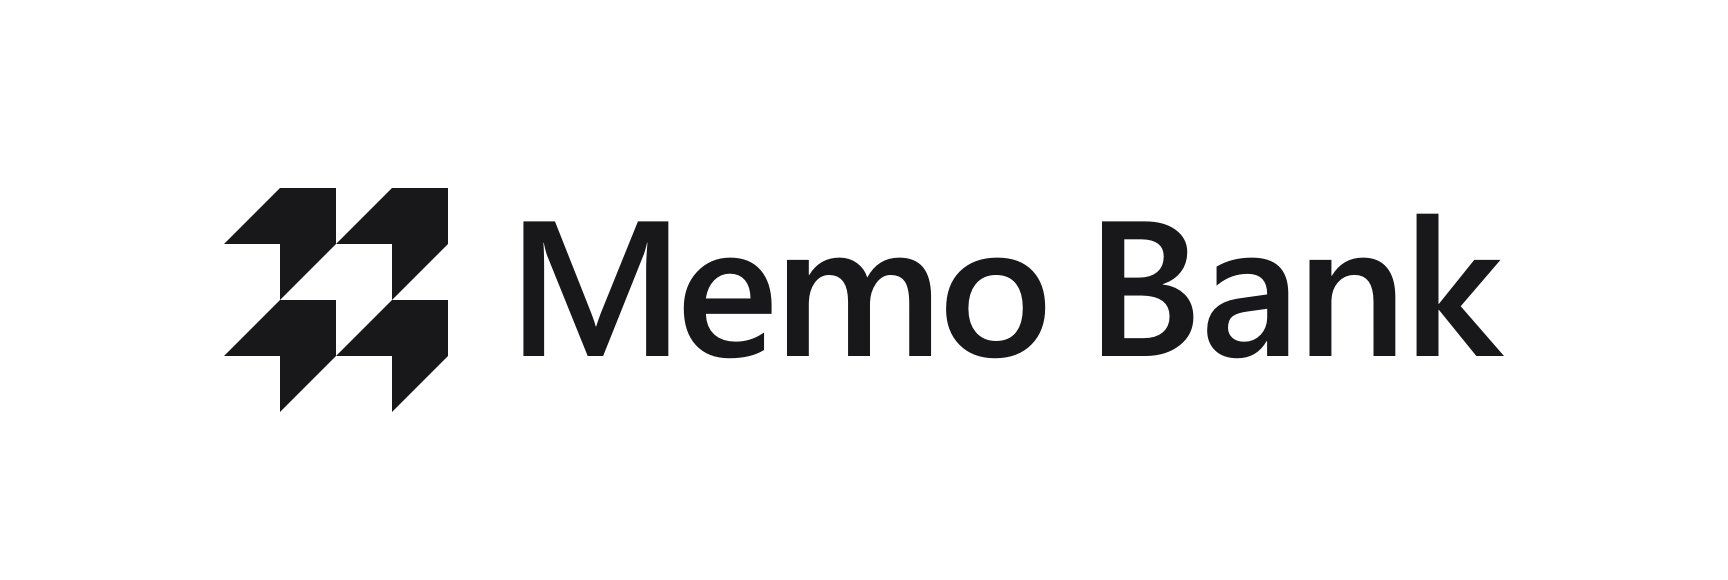 Le lancement de Memo Bank (ex Margo Bank)